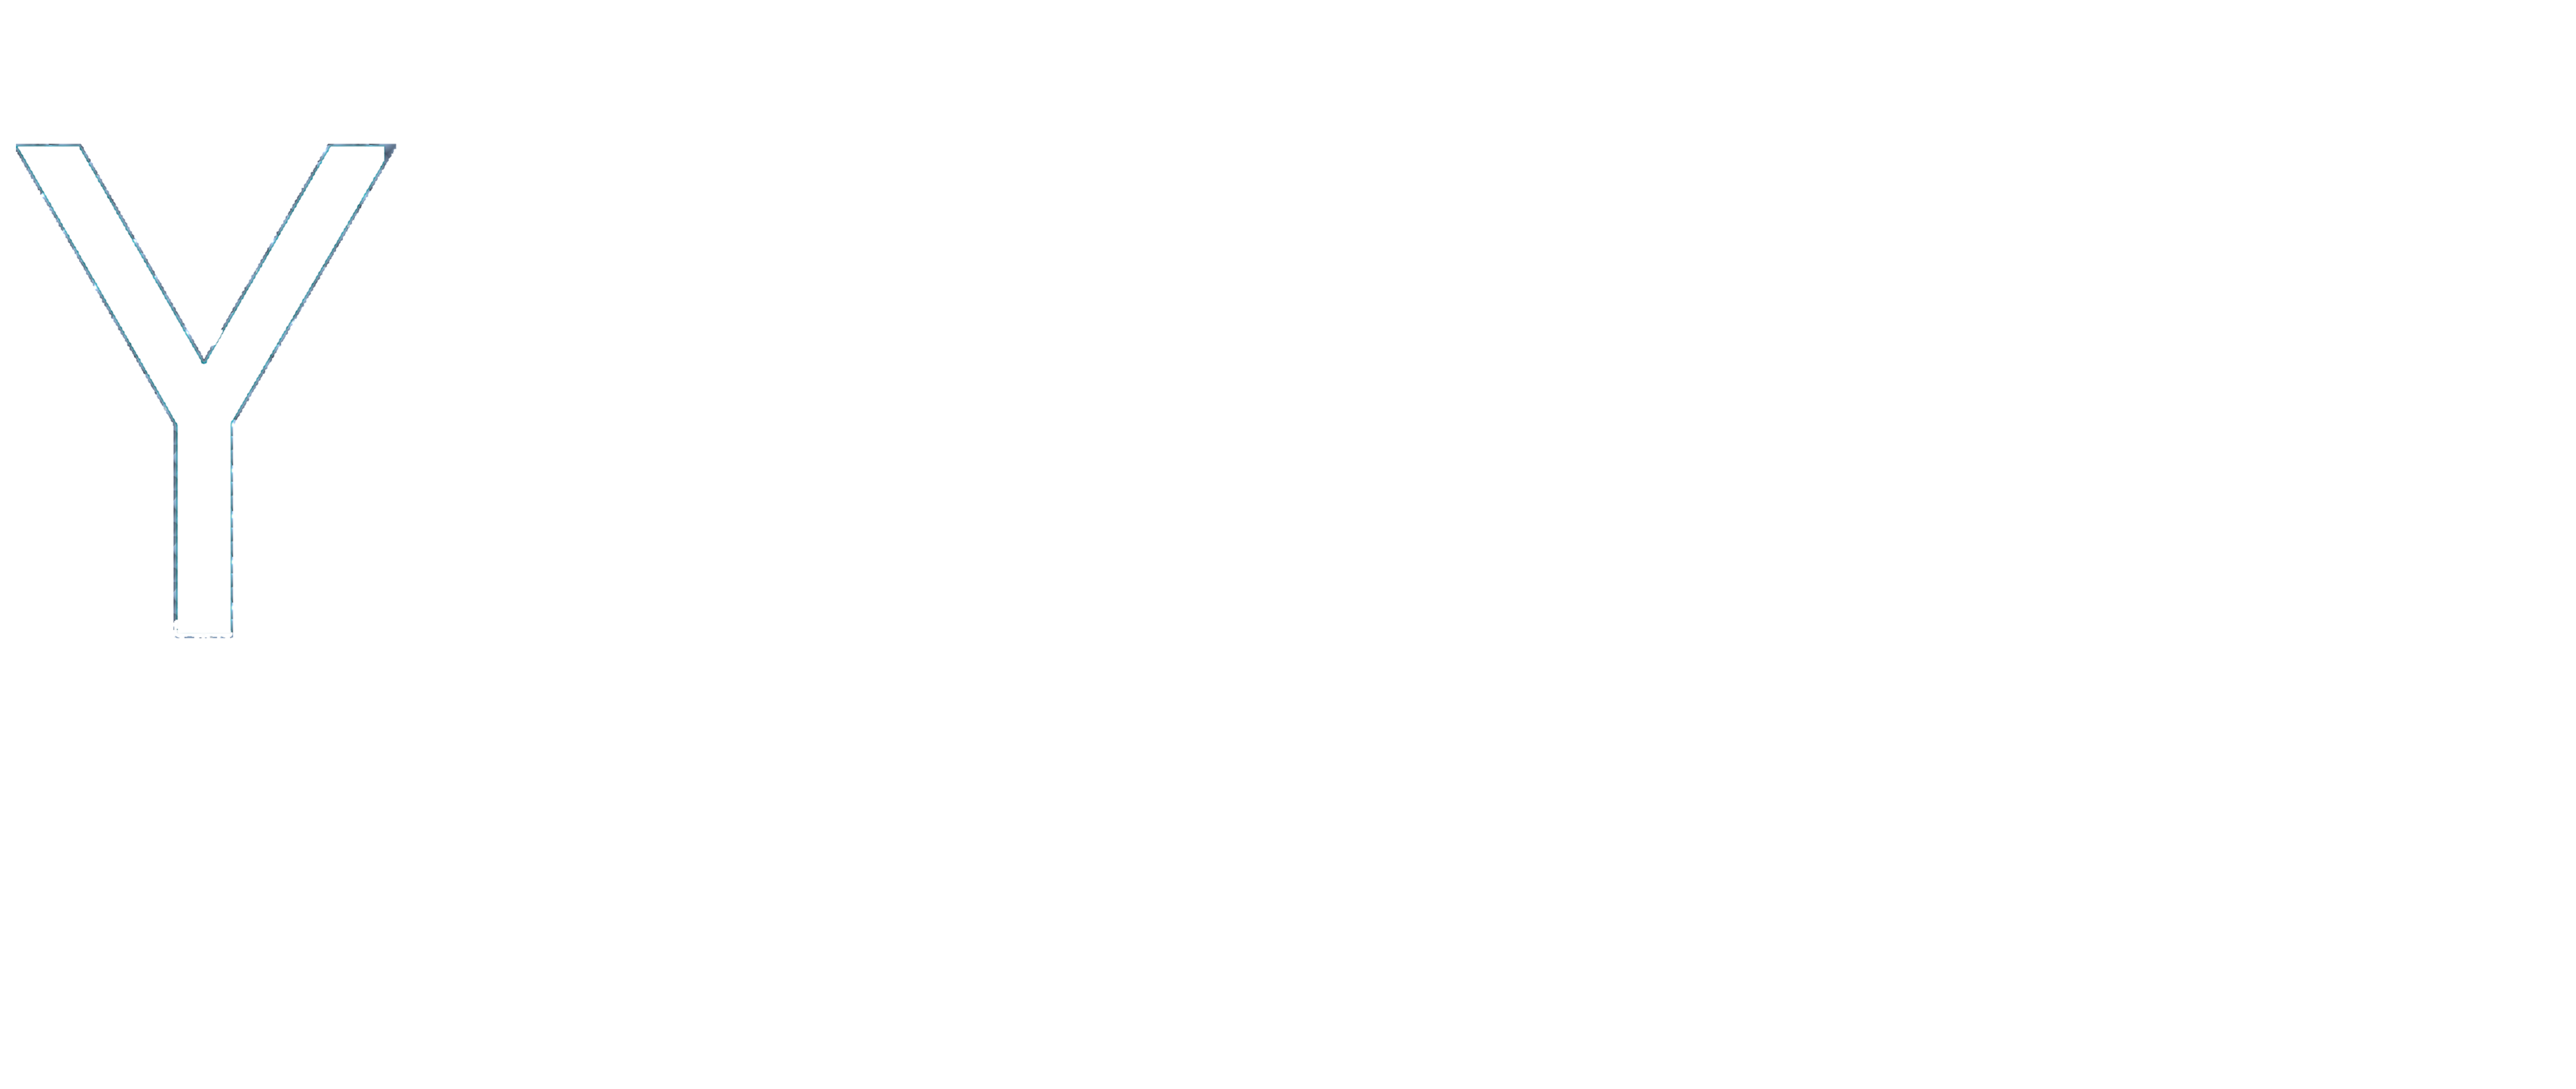 Yogist logo